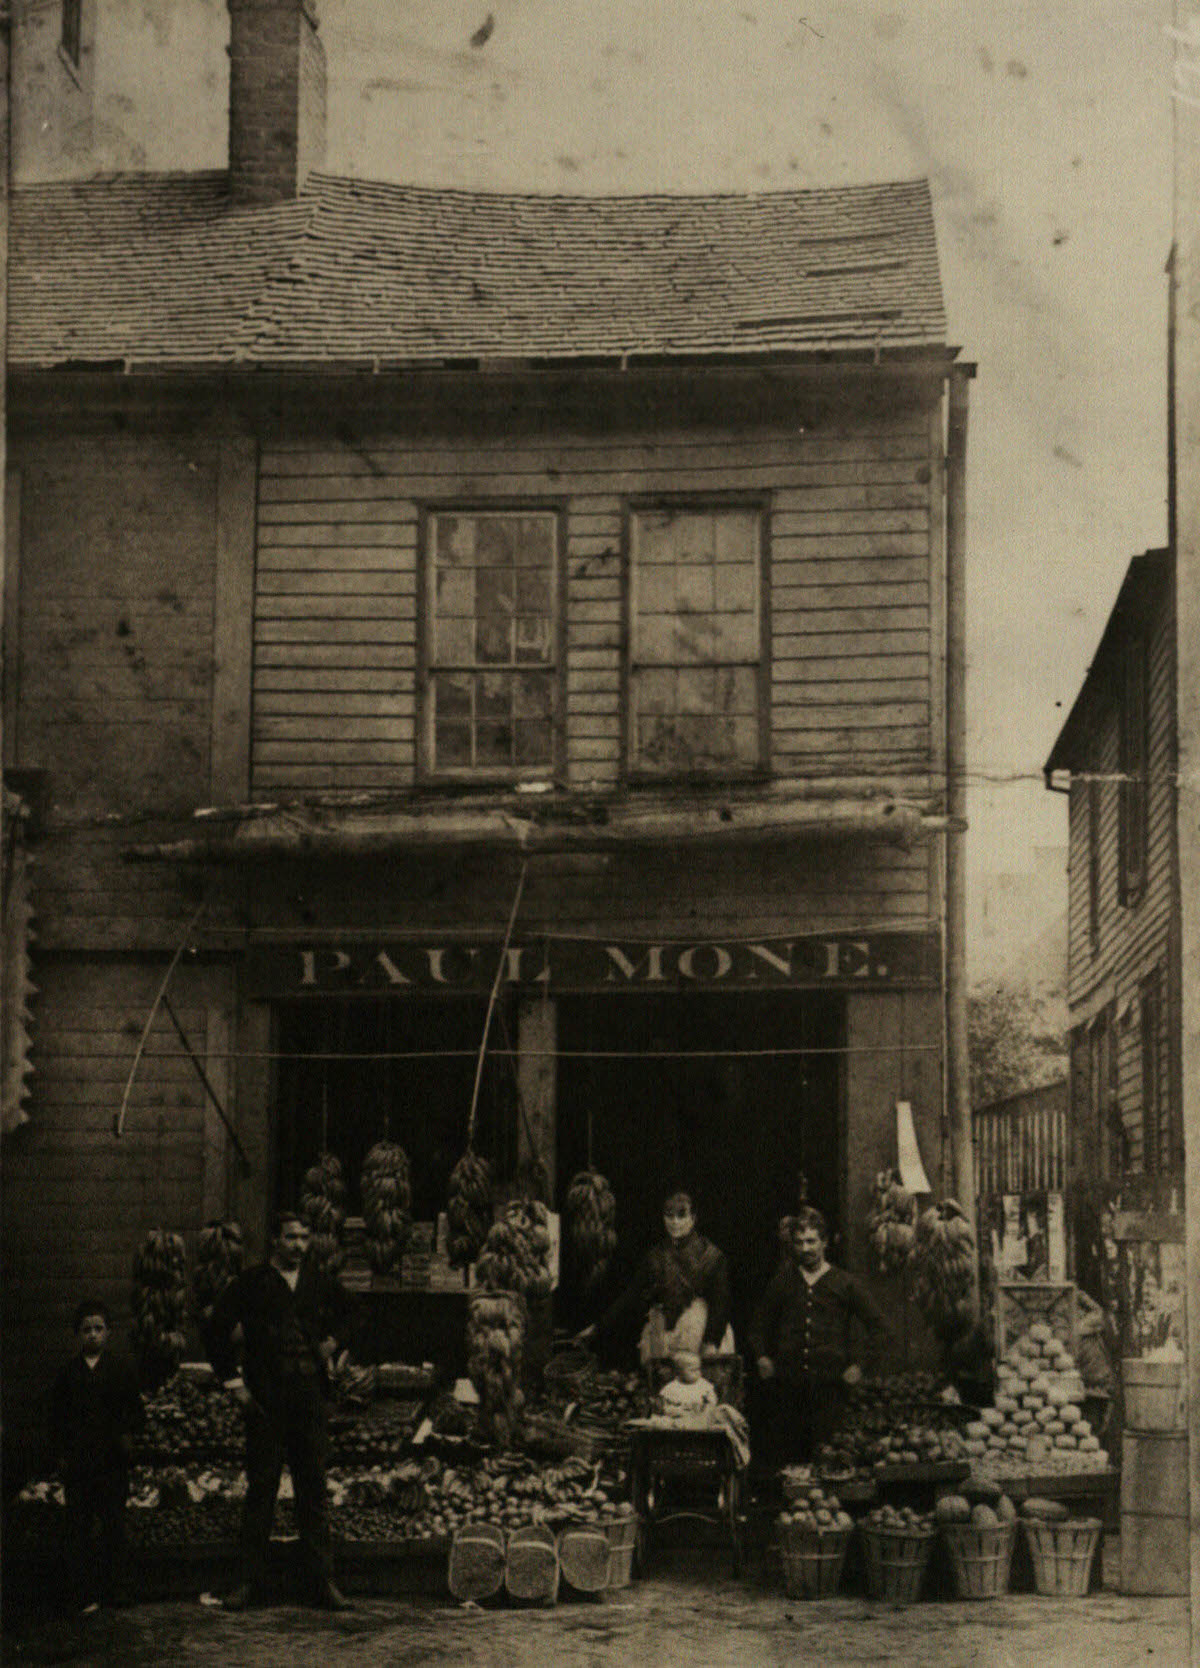 Paul Mone Grocery photograph, 1881